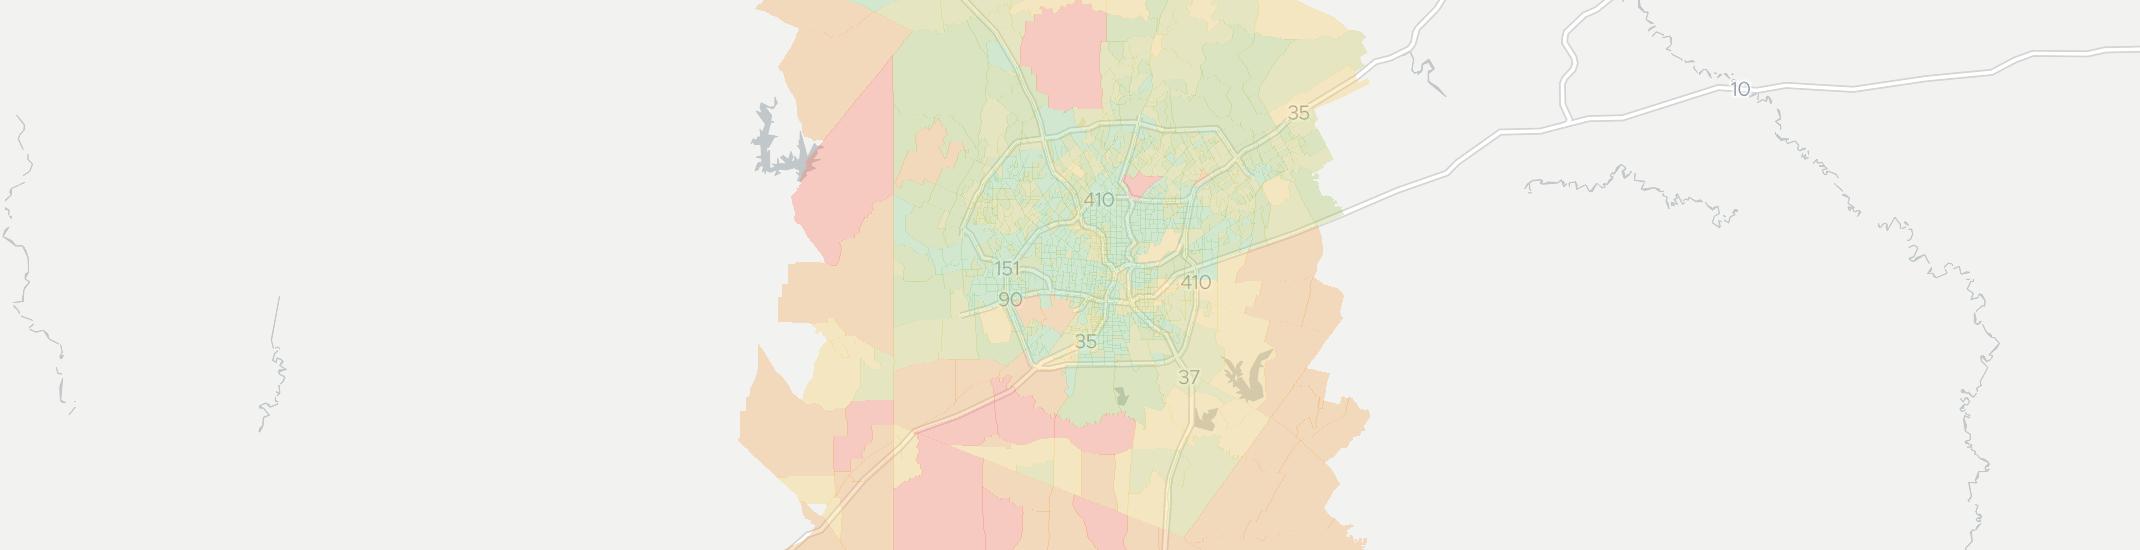 Internet Availability in San Antonio Map